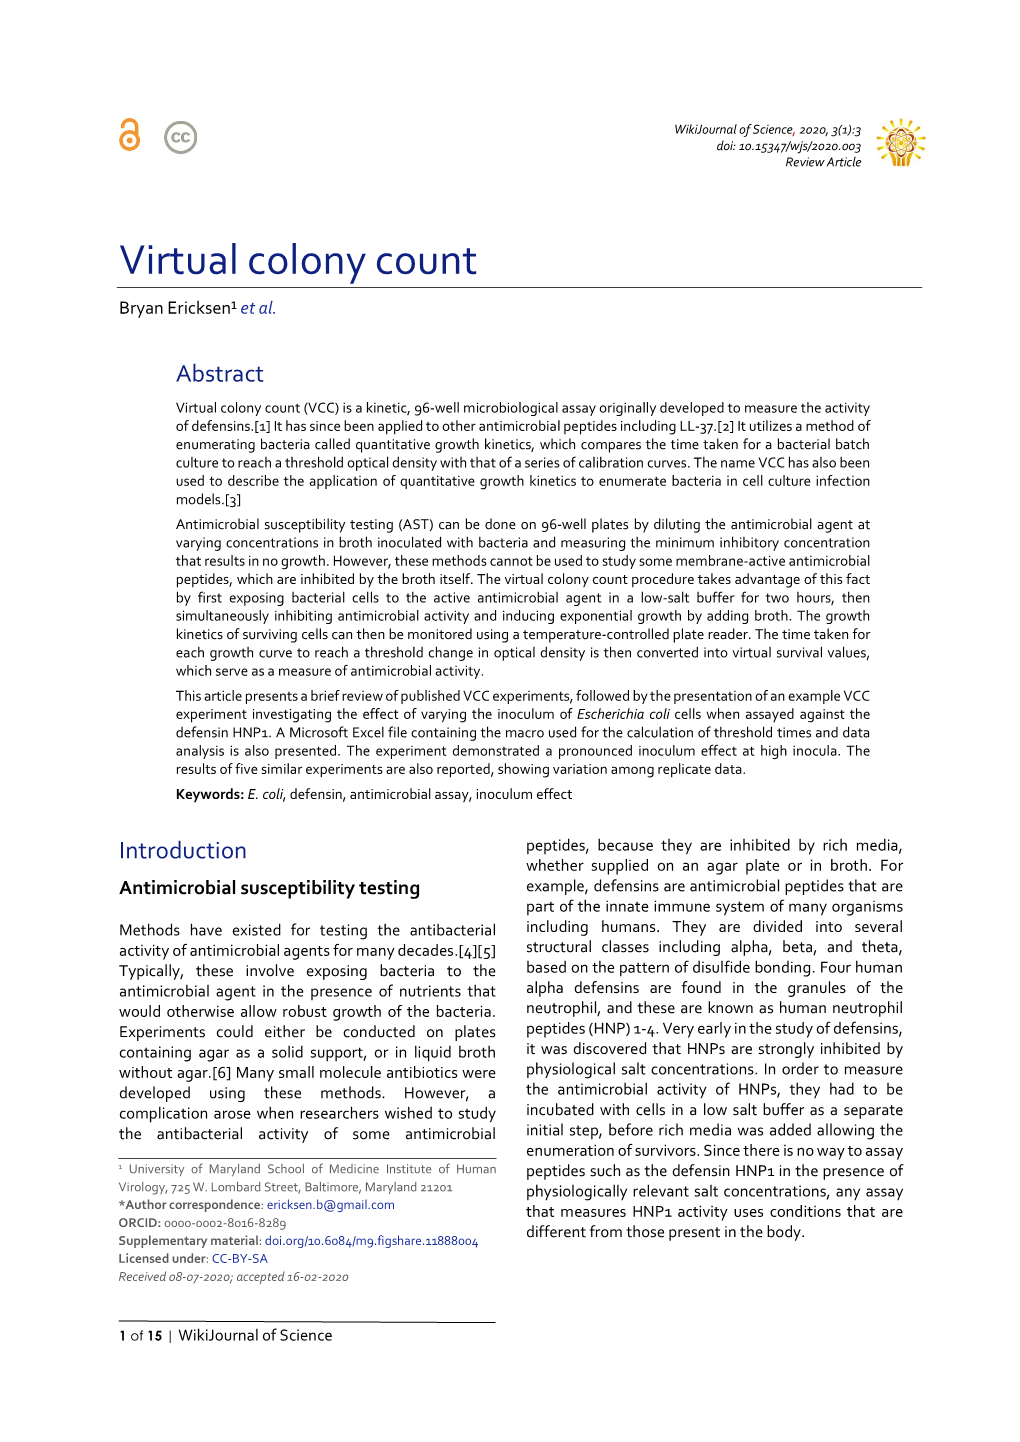 Virtual Colony Count Bryan Ericksen¹ Et Al